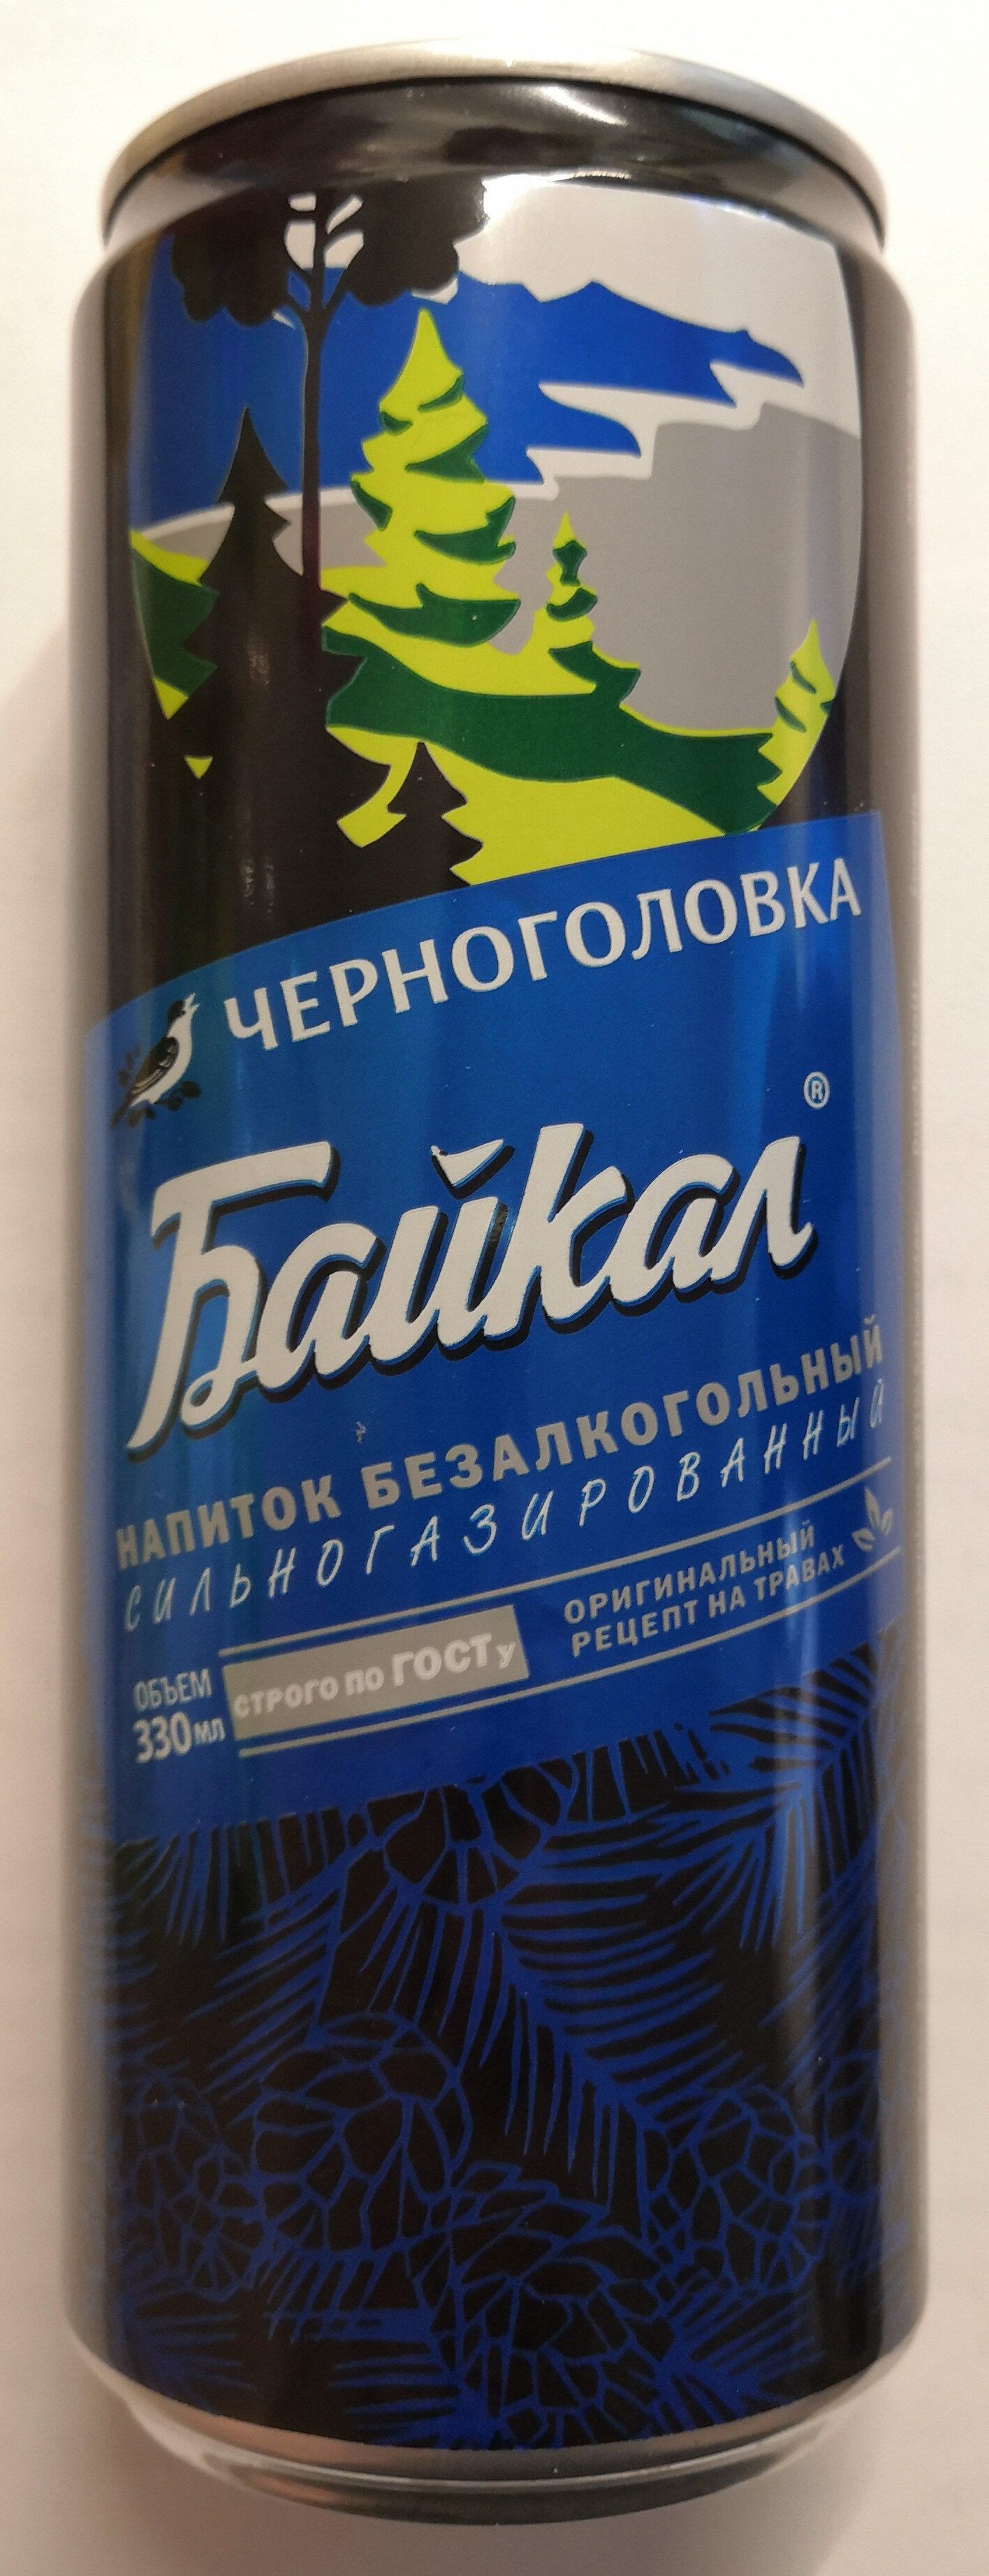 Baikal - Produkt